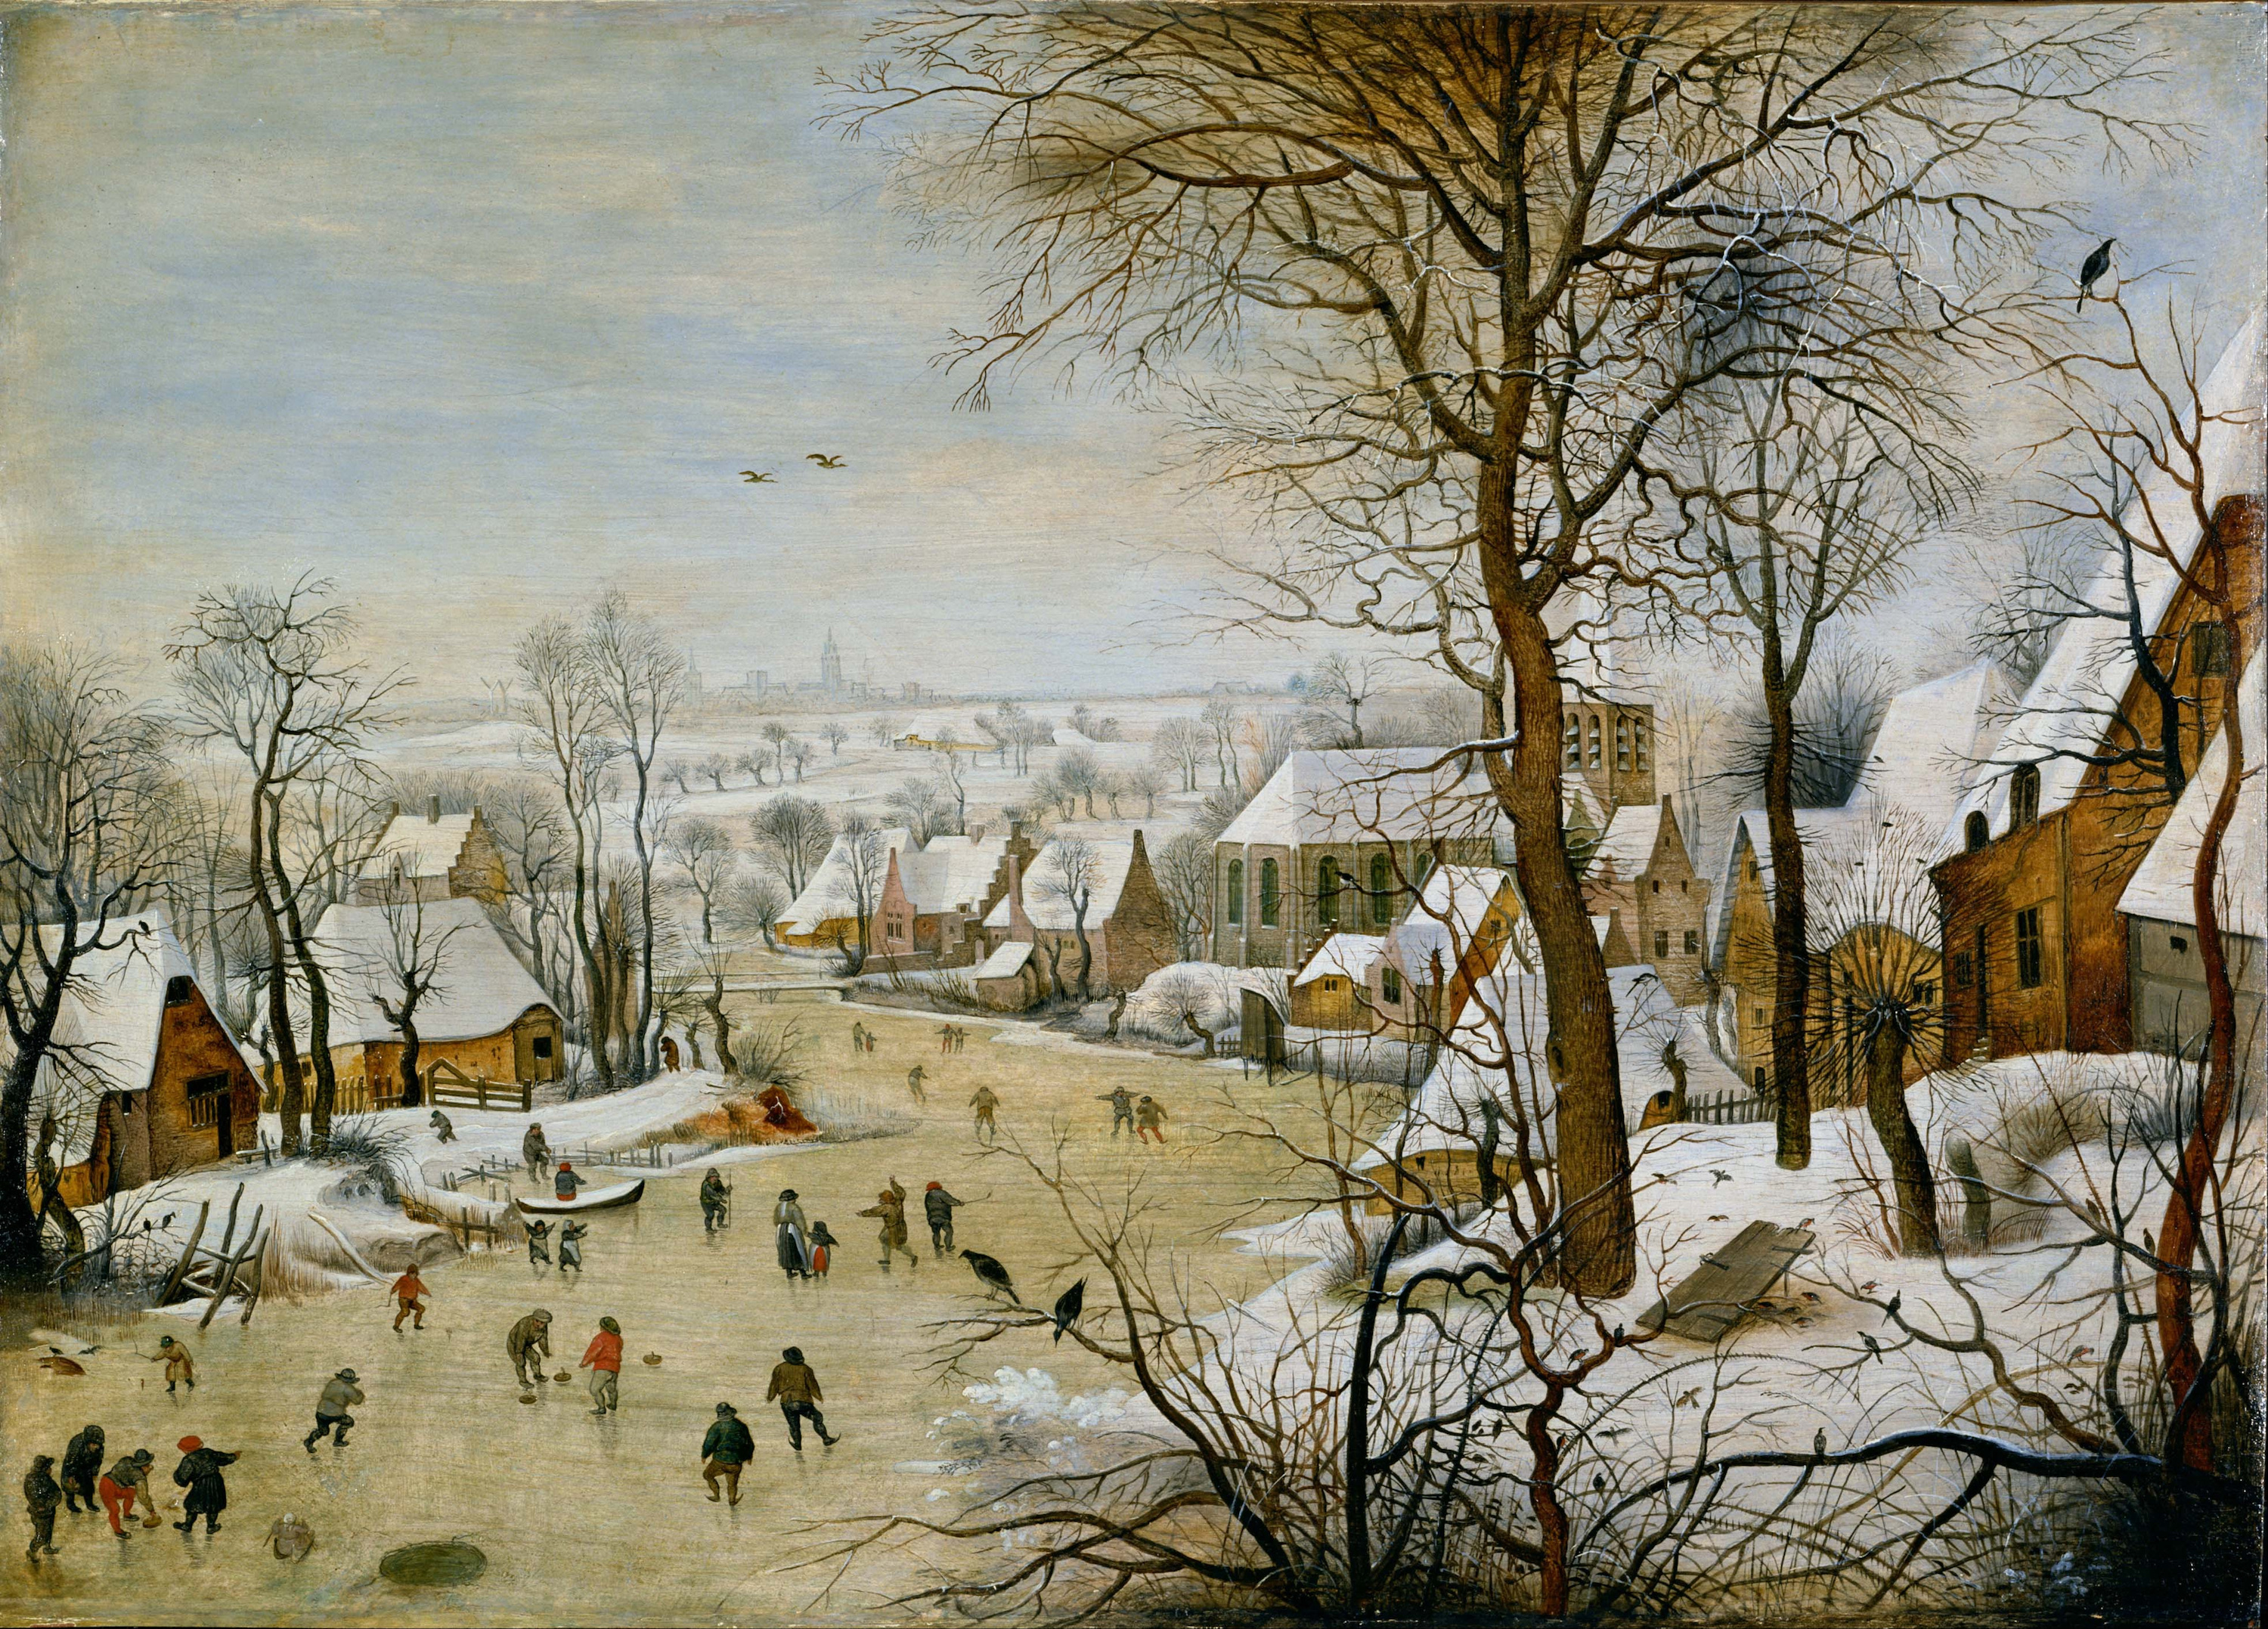 Winter Landscape with Skaters and Birds Trap by Pieter Bruegel the Elder - 1565 - 37 x 55,5 cm Musée des Beaux-Arts